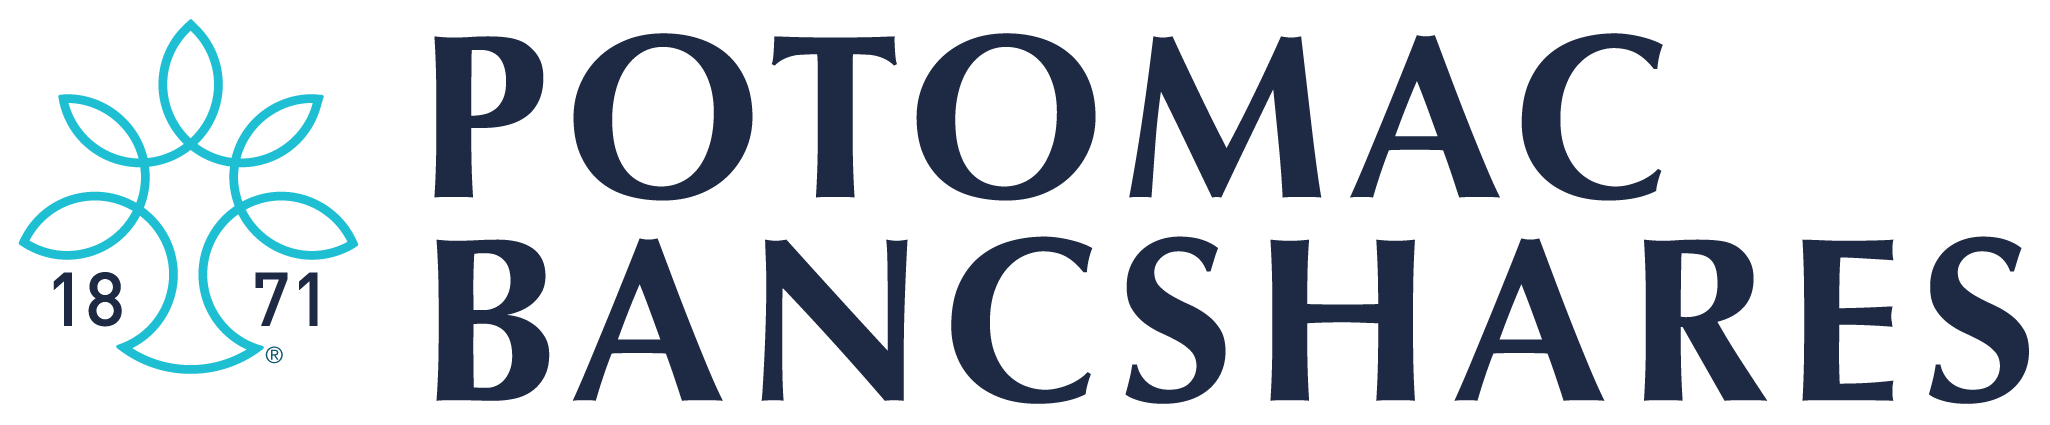 Potomac-Bancshares_Logo-Trademark